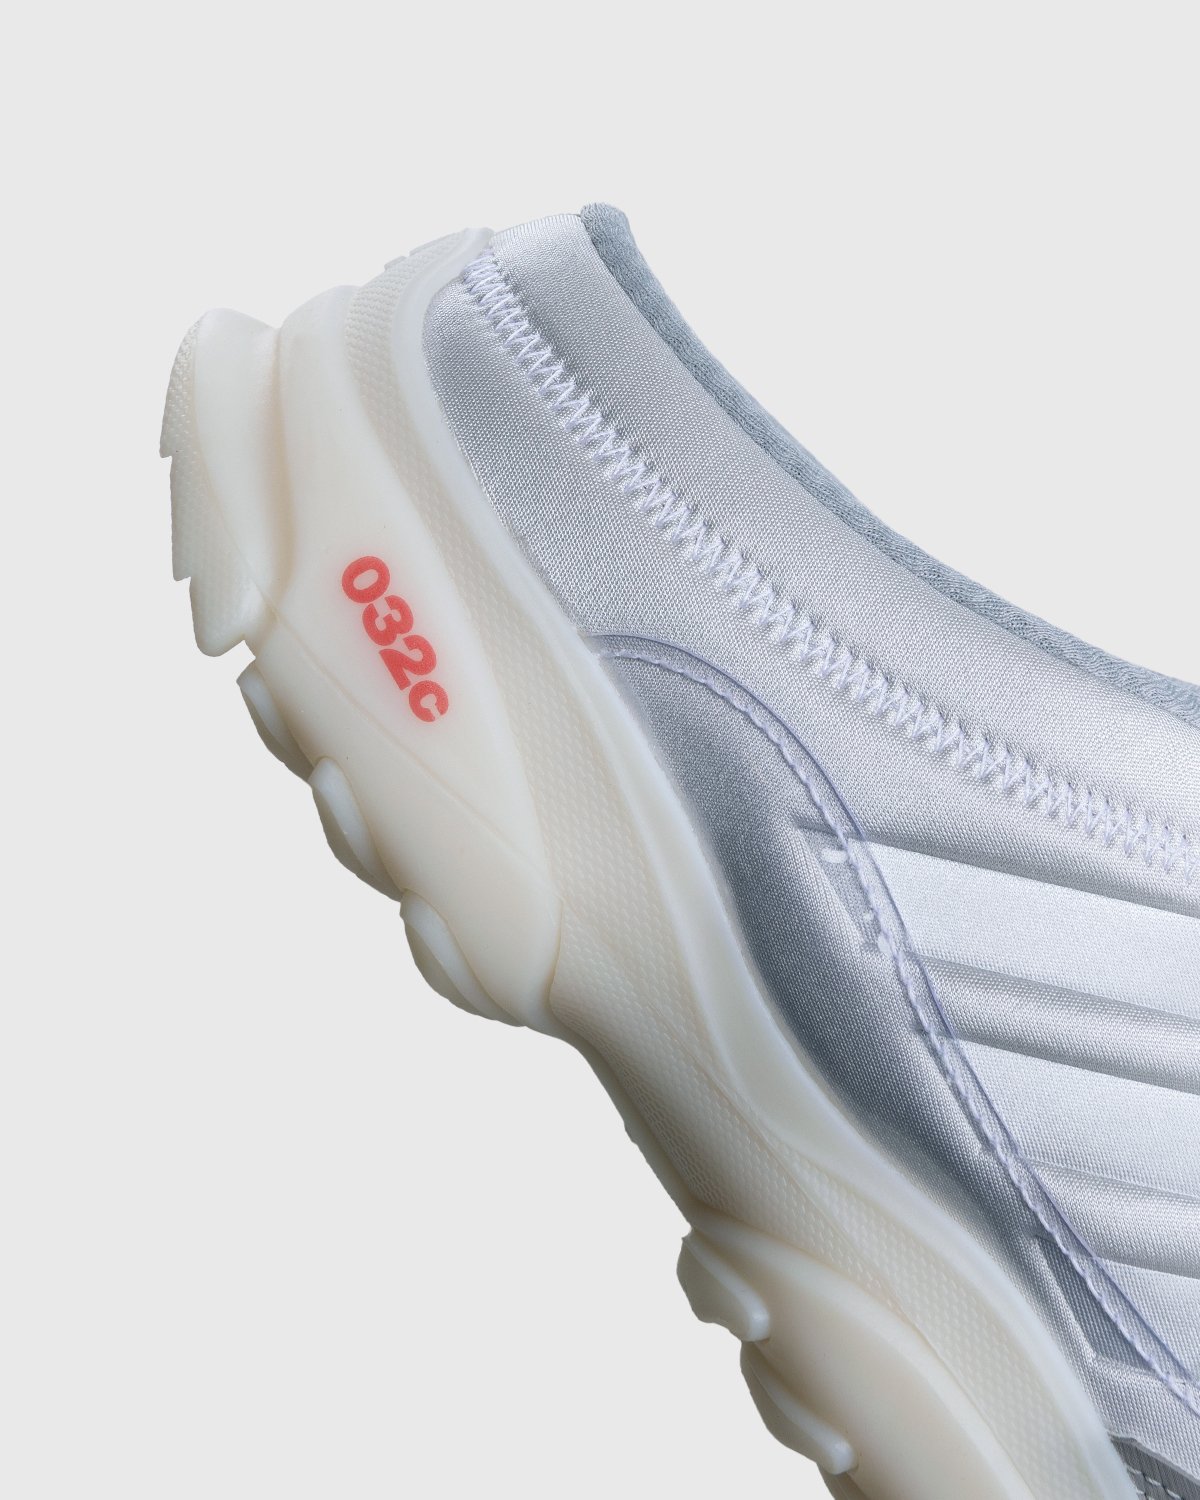 Adidas x 032c - GSG Mule Greone - Footwear - White - Image 5